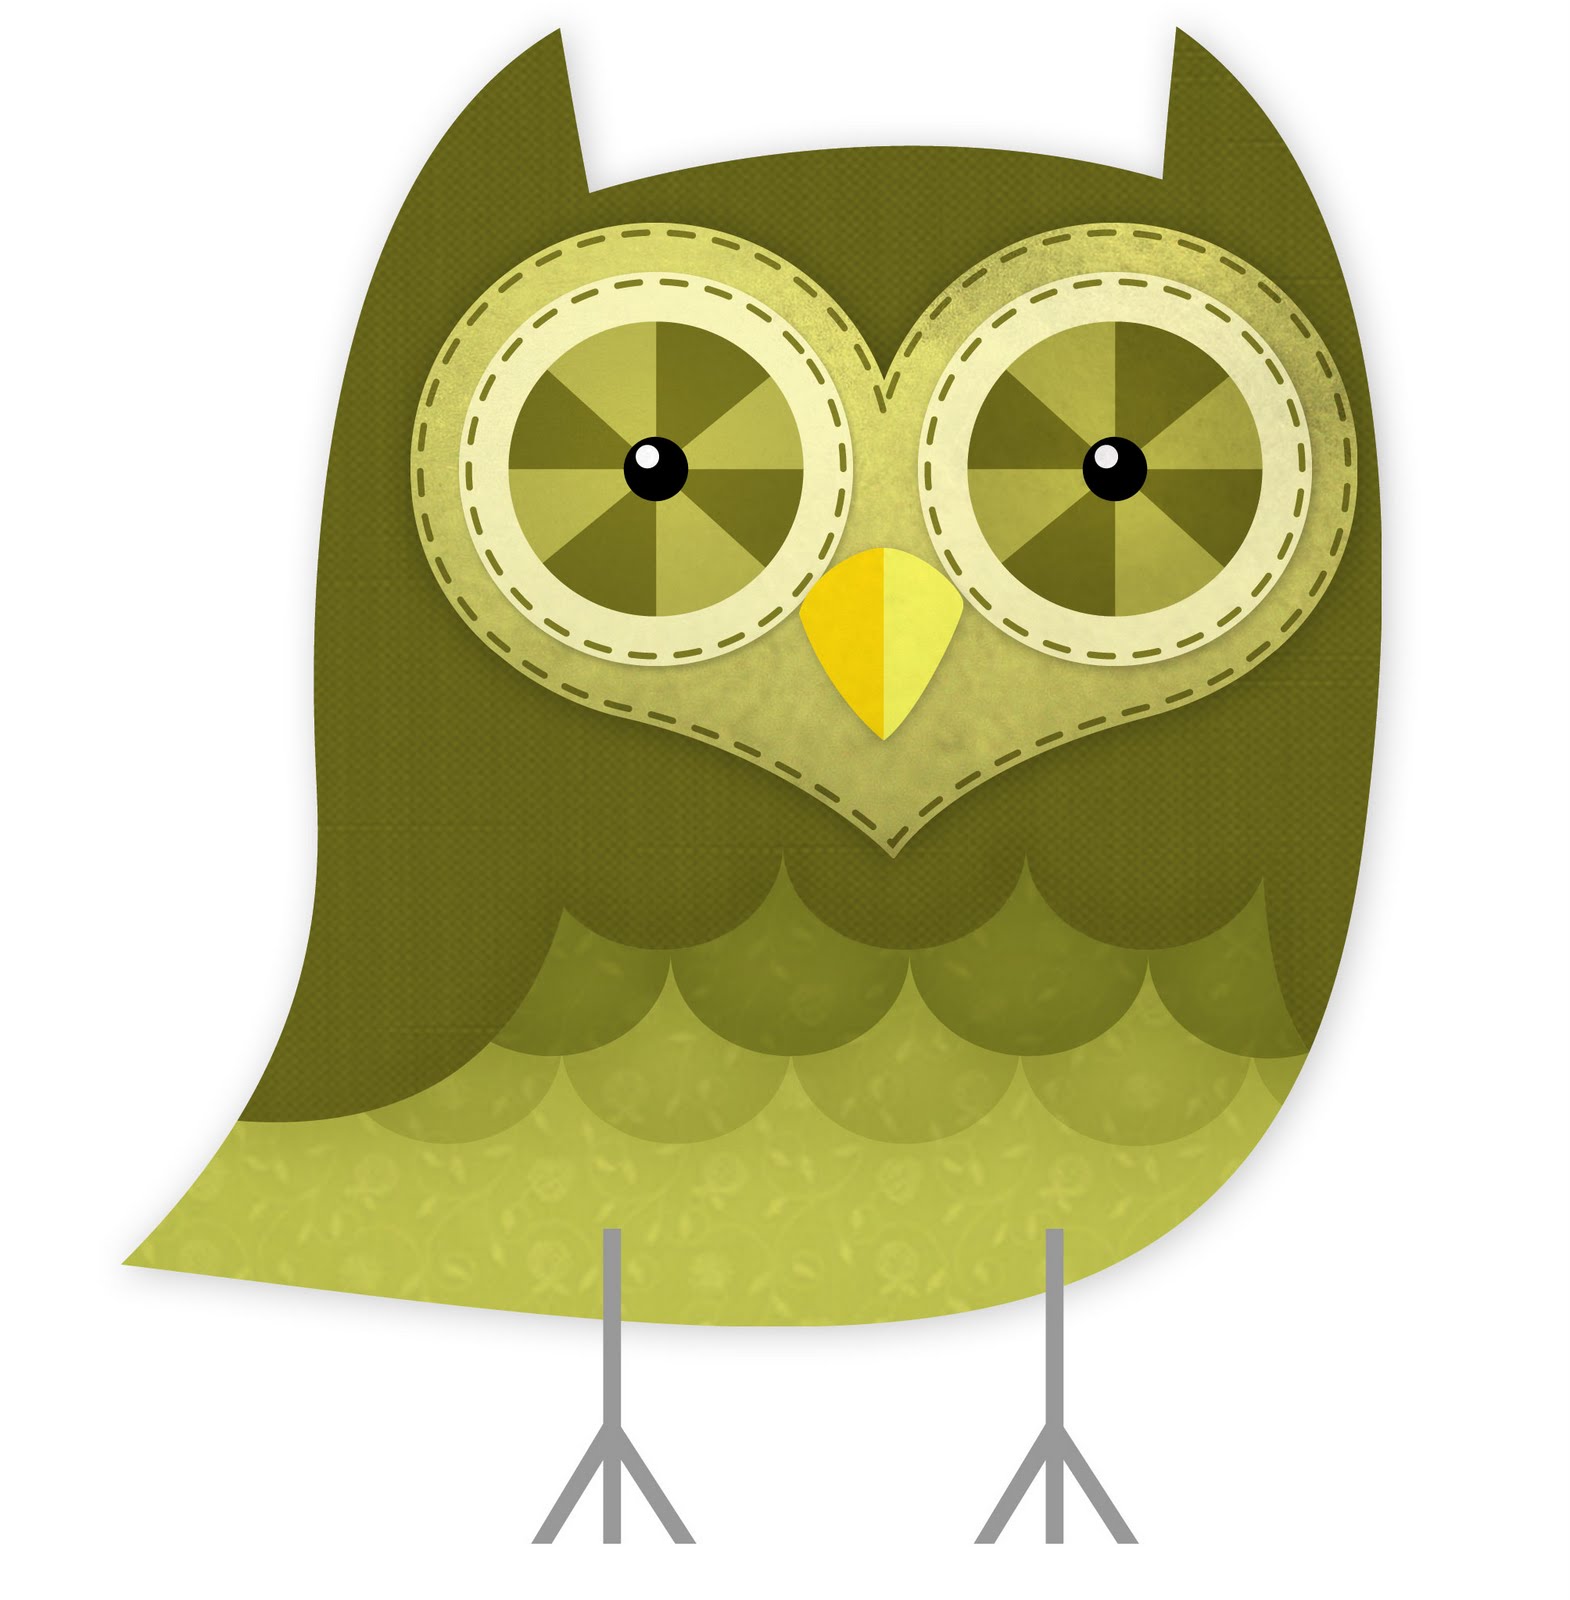 Owl Cartoon Image Wallpaper High Definition